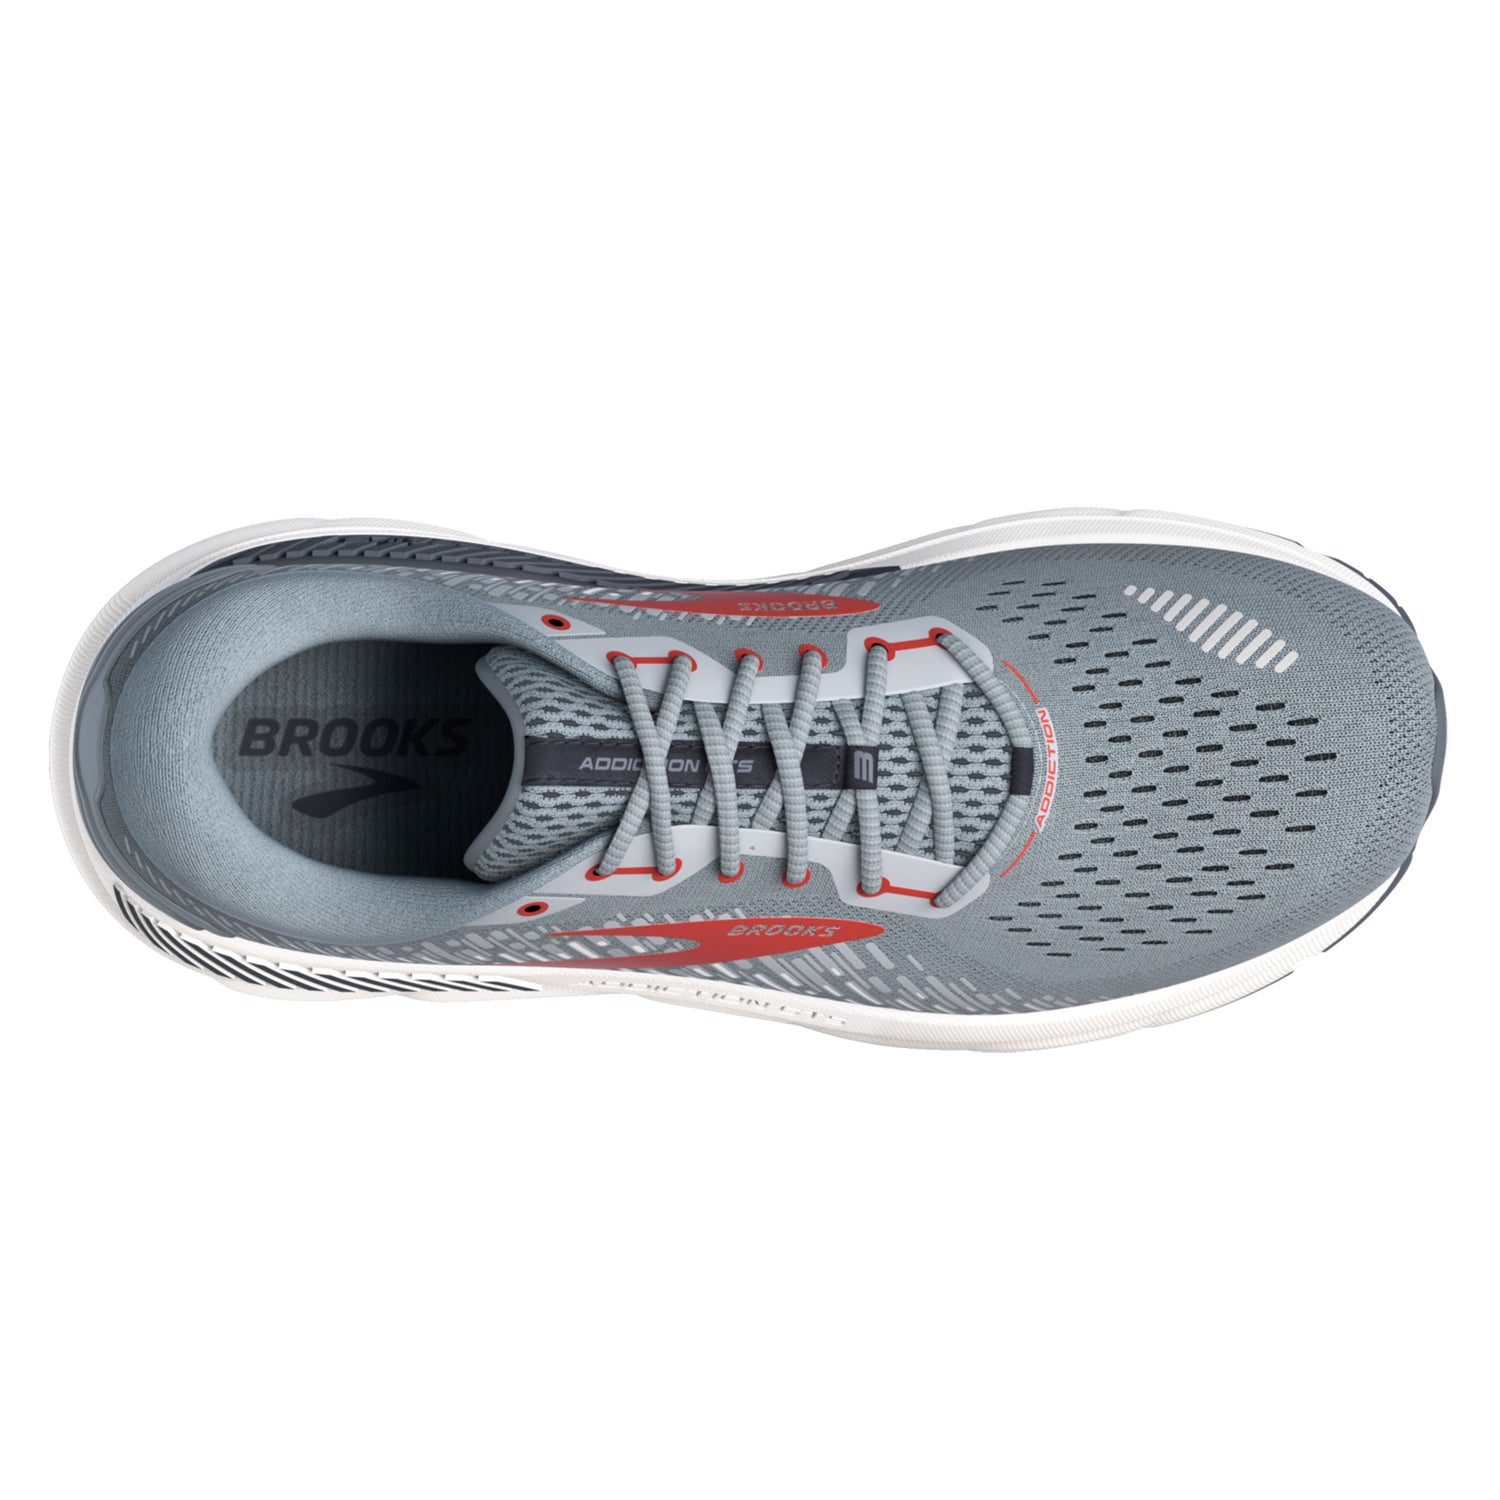 Peltz Shoes  Men's Brooks Addiction GTS 15 Running Shoe - Extra Wide Width Grey/Ebony/Chili Oil 110365 4E 043